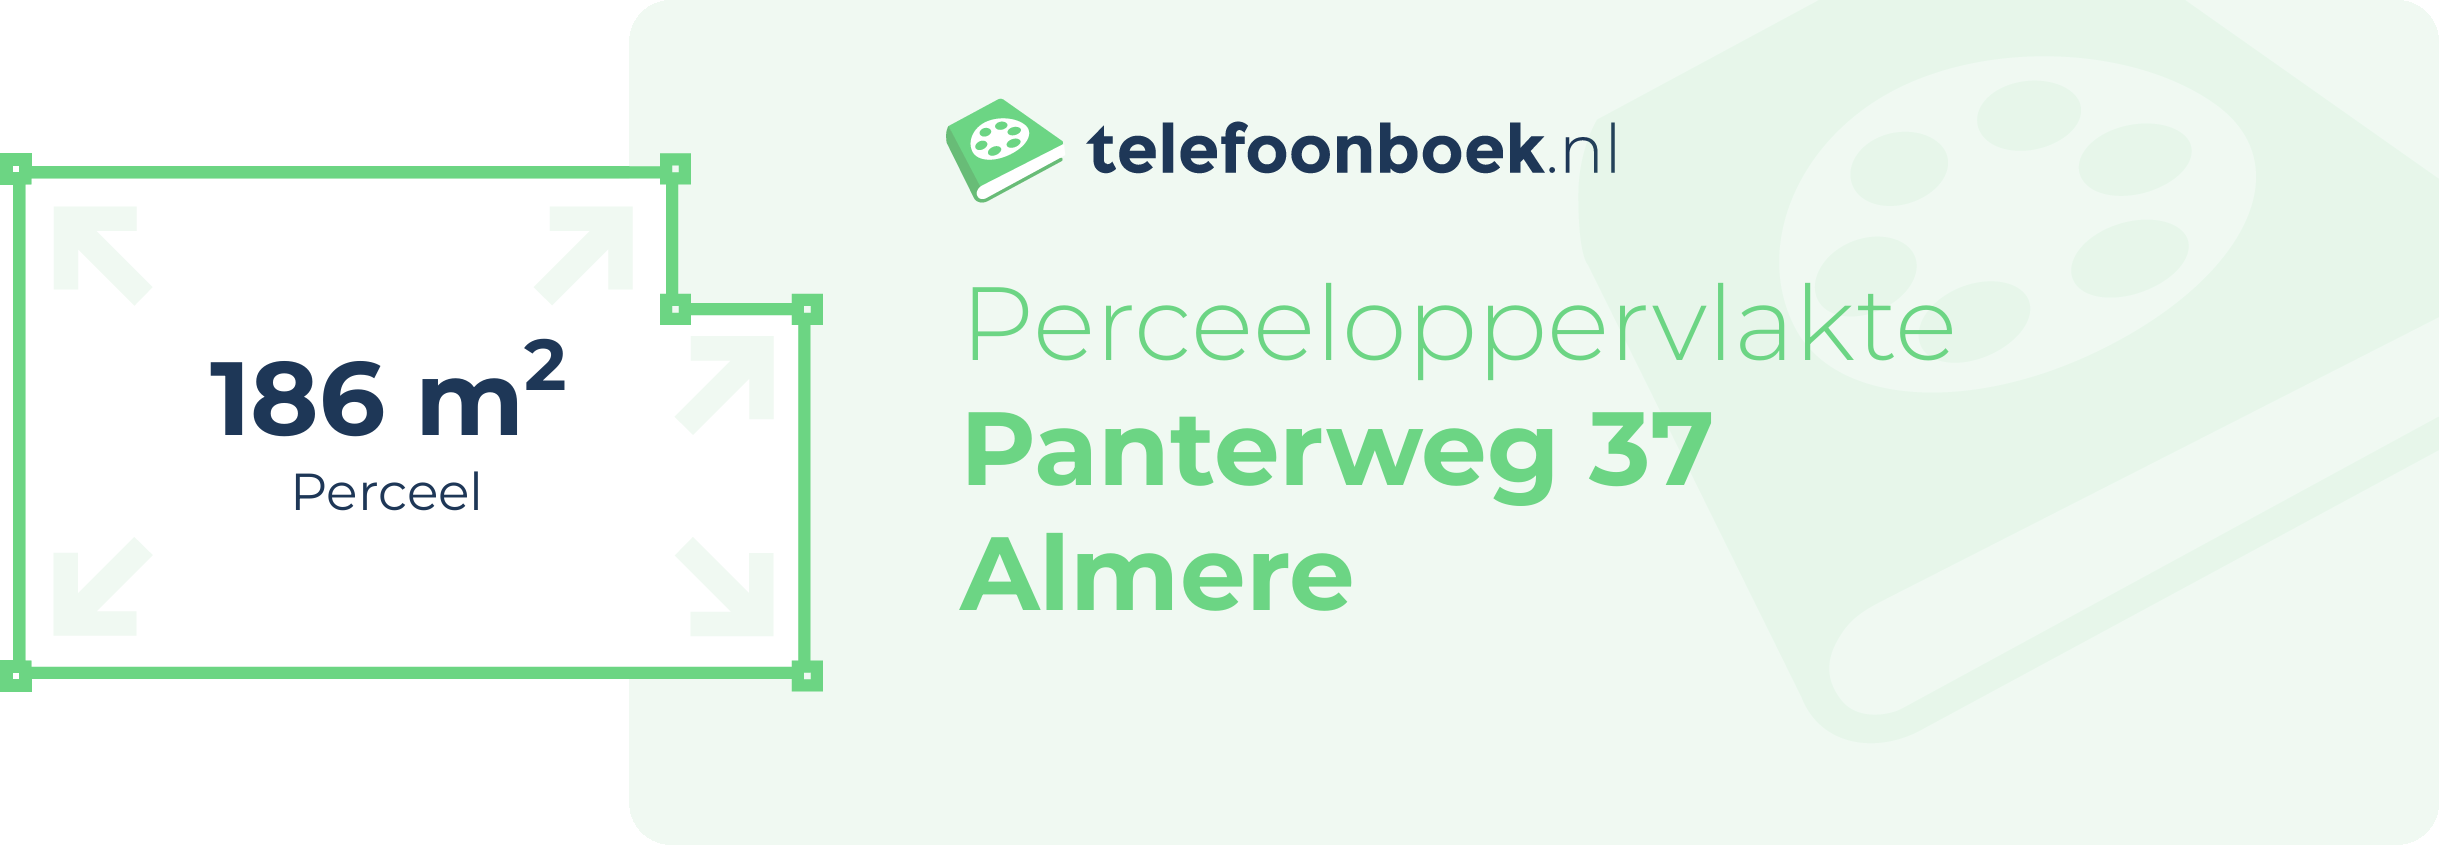 Perceeloppervlakte Panterweg 37 Almere